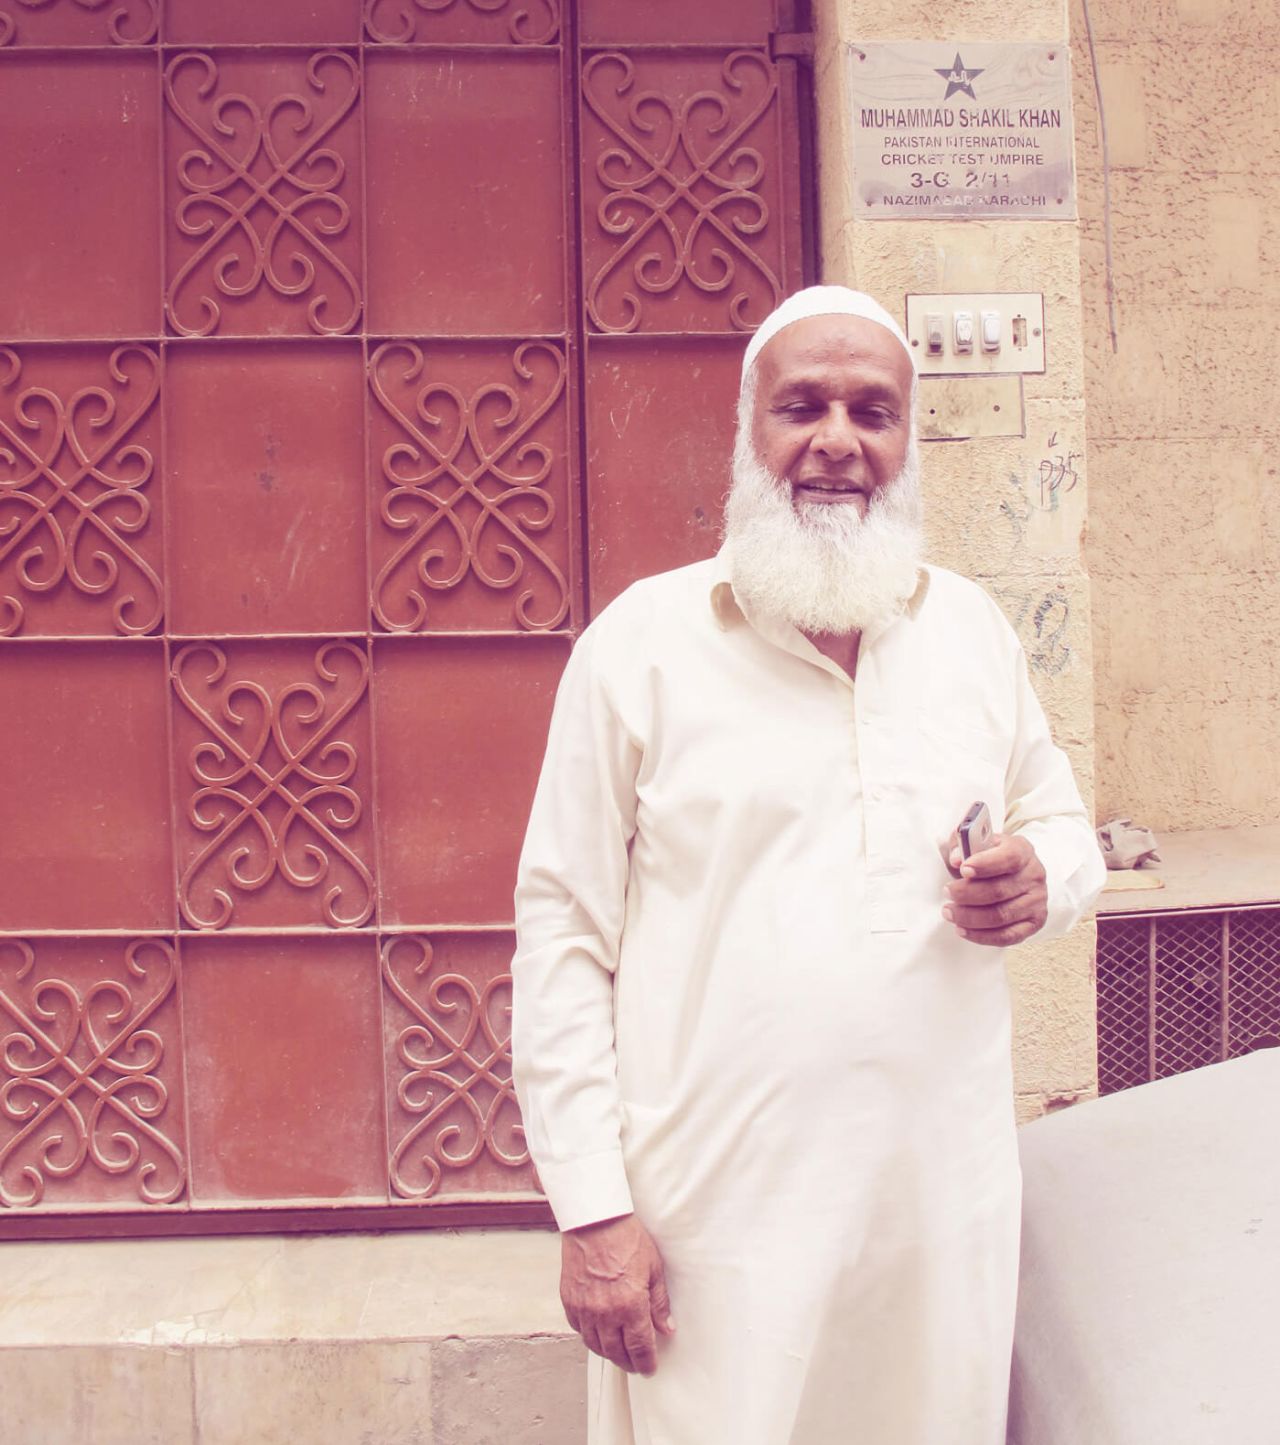 Former Pakistan umpire Shakeel Khan outside his Nazimabad home, Karachi, 2015